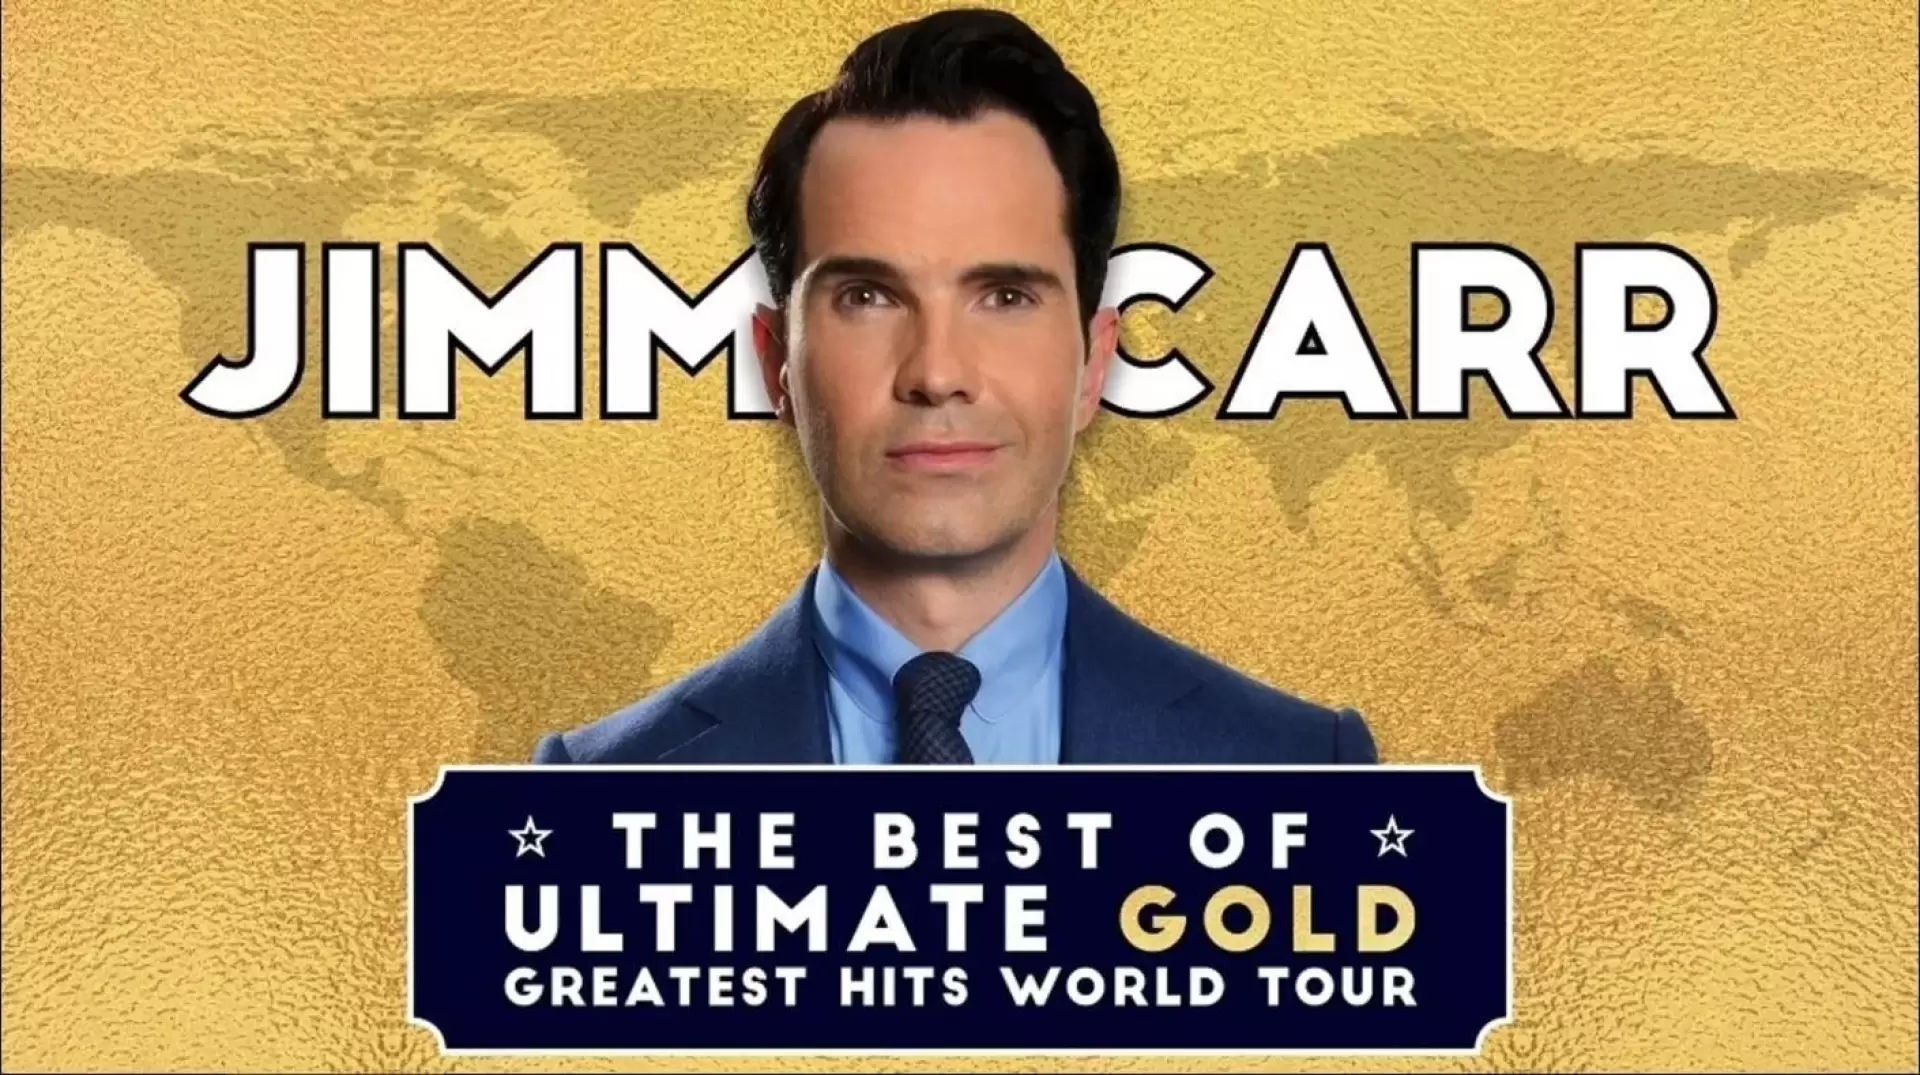 دانلود فیلم Jimmy Carr: The Best of Ultimate Gold Greatest Hits 2019 با زیرنویس فارسی و تماشای آنلاین